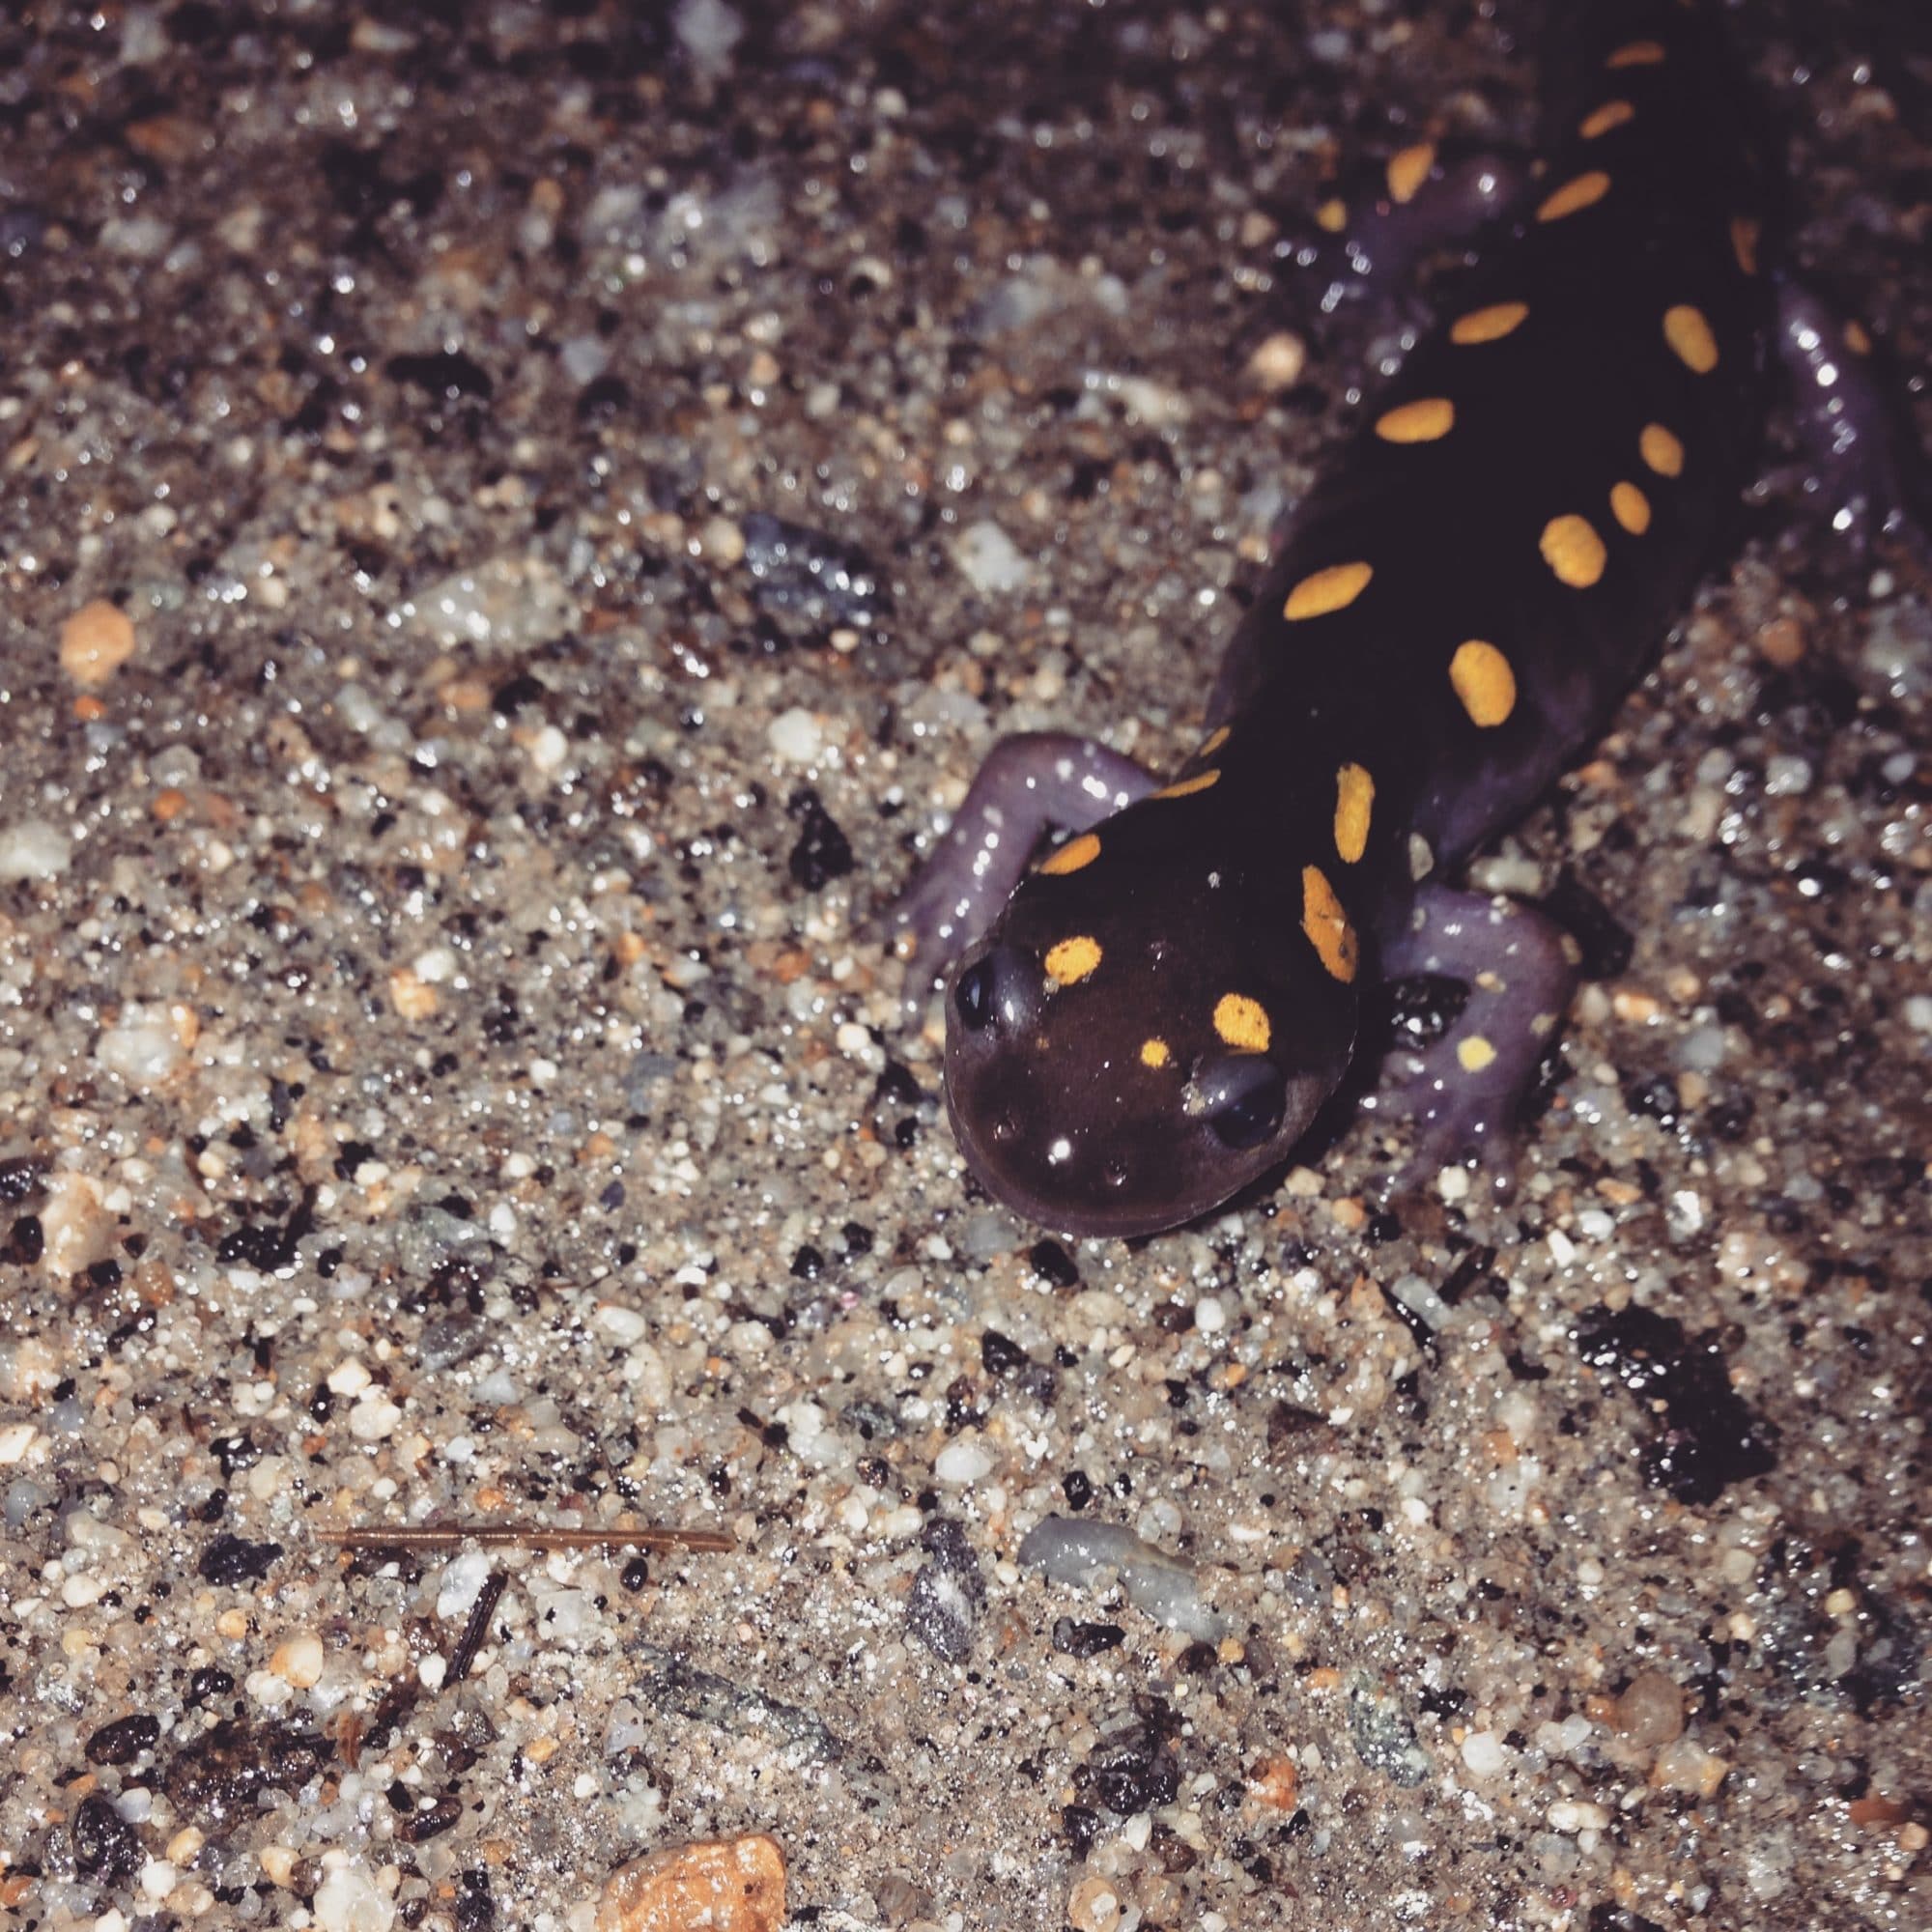 A spotted salamander ventures across a dirt road. (photo © Jess Dude)